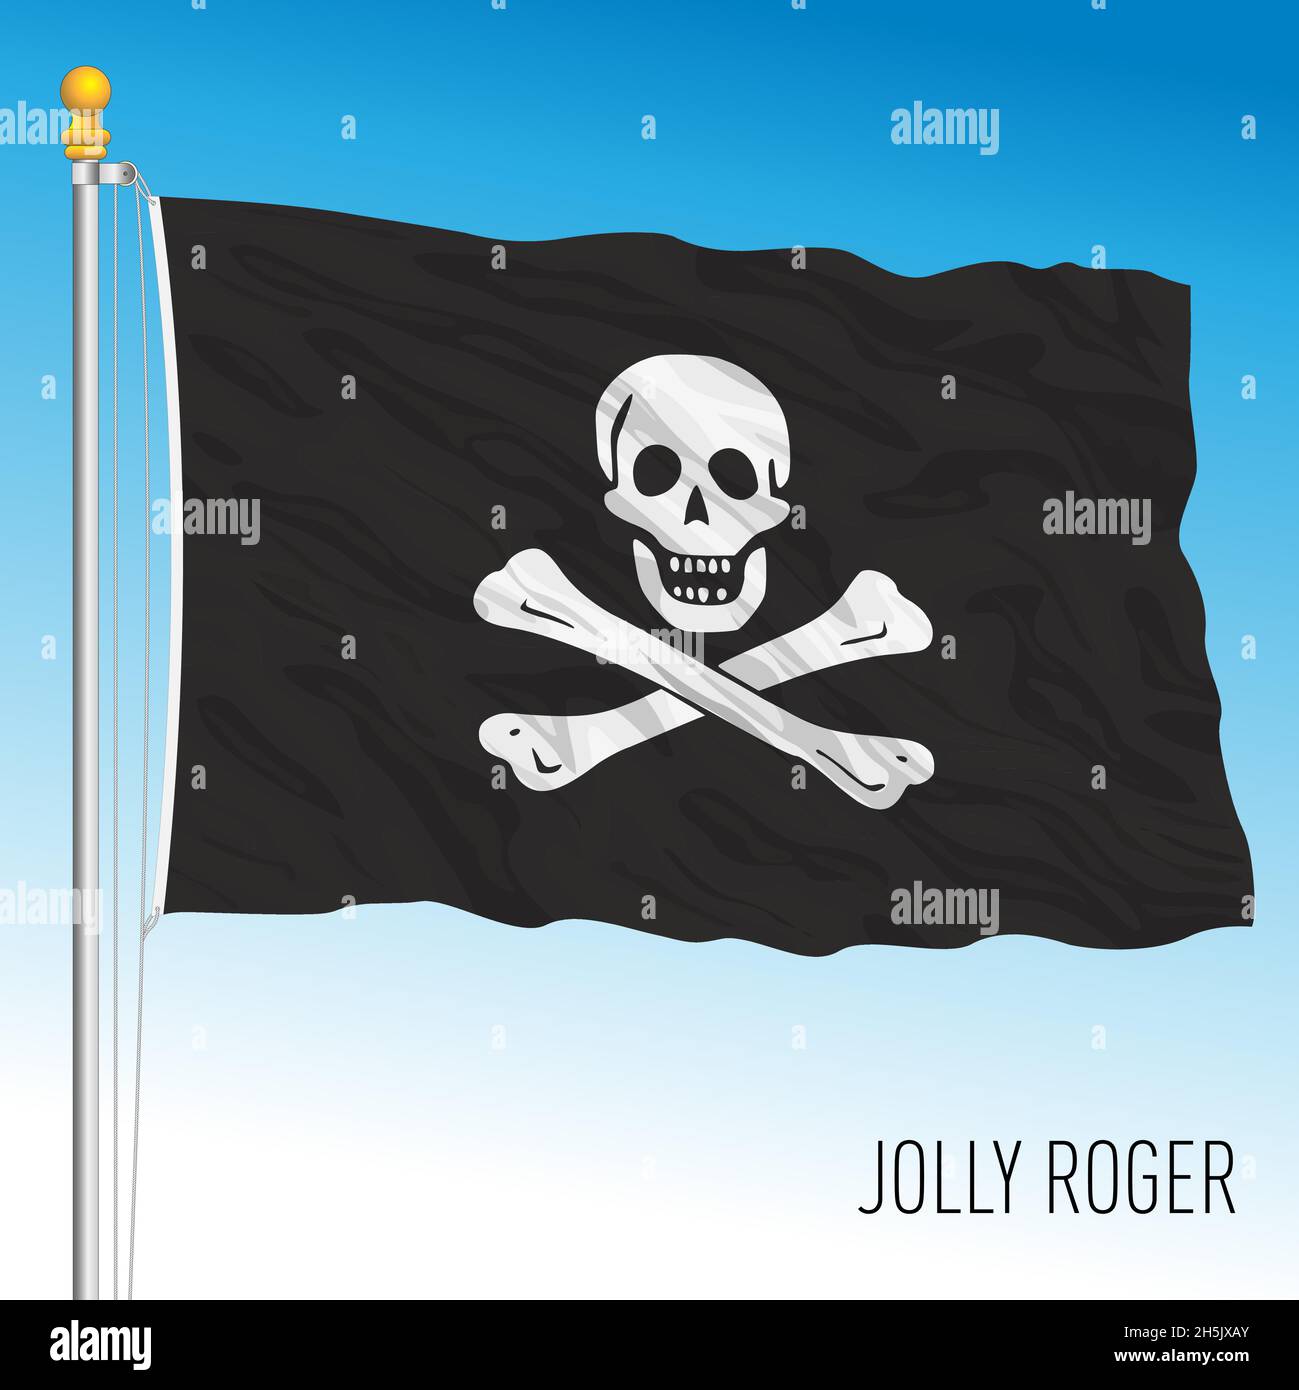 Jolly Roger Pirate flag, vector illustration Stock Vector